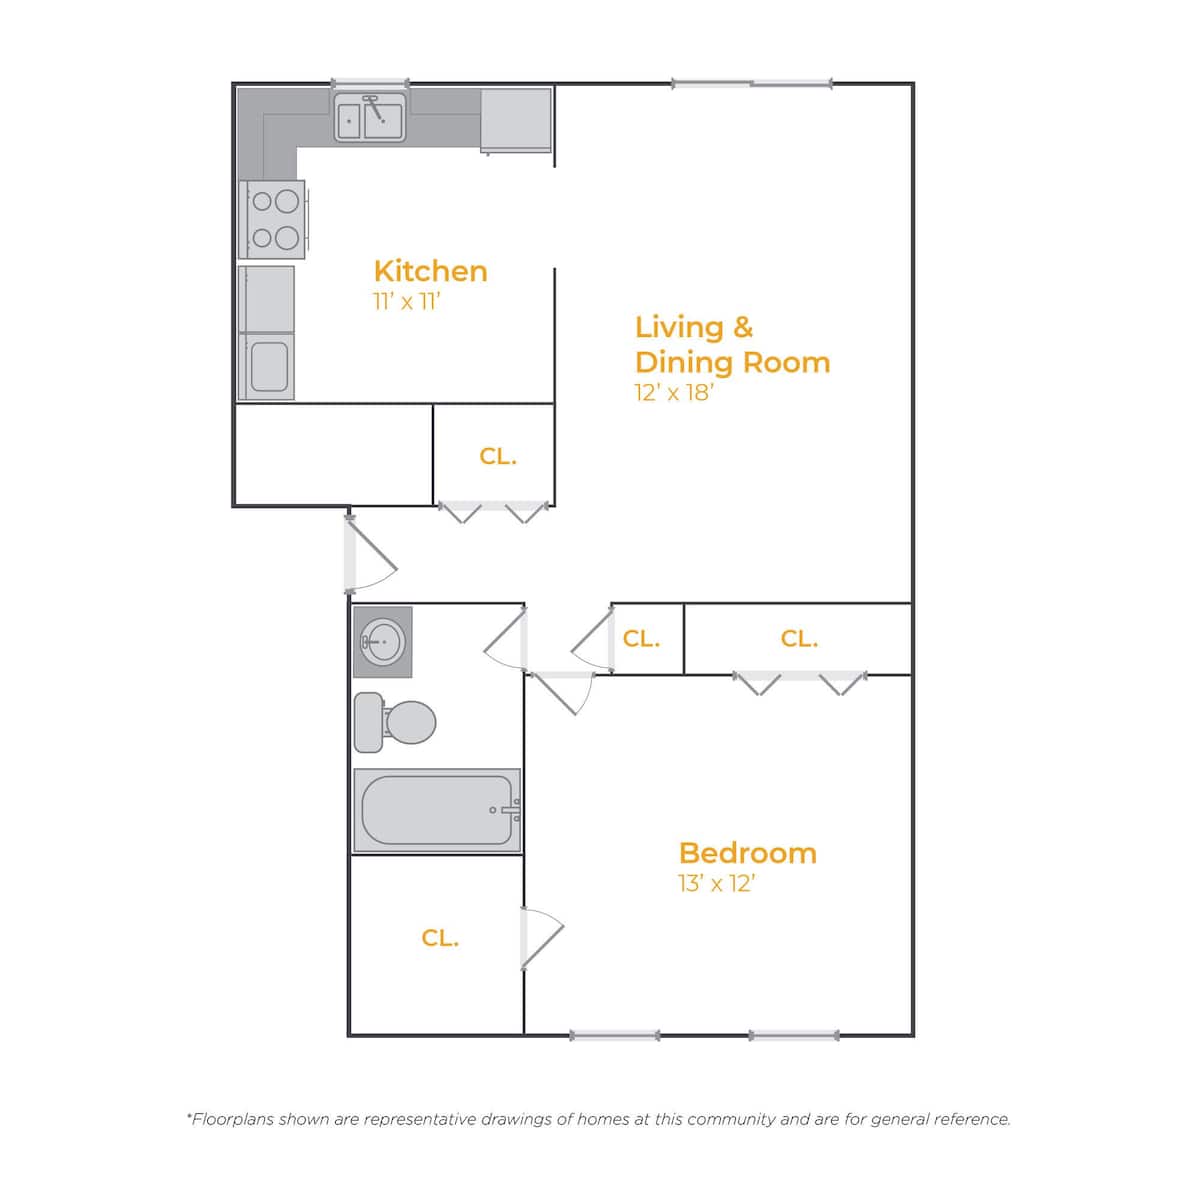 Floorplan diagram for Cincinnati 110, showing 1 bedroom